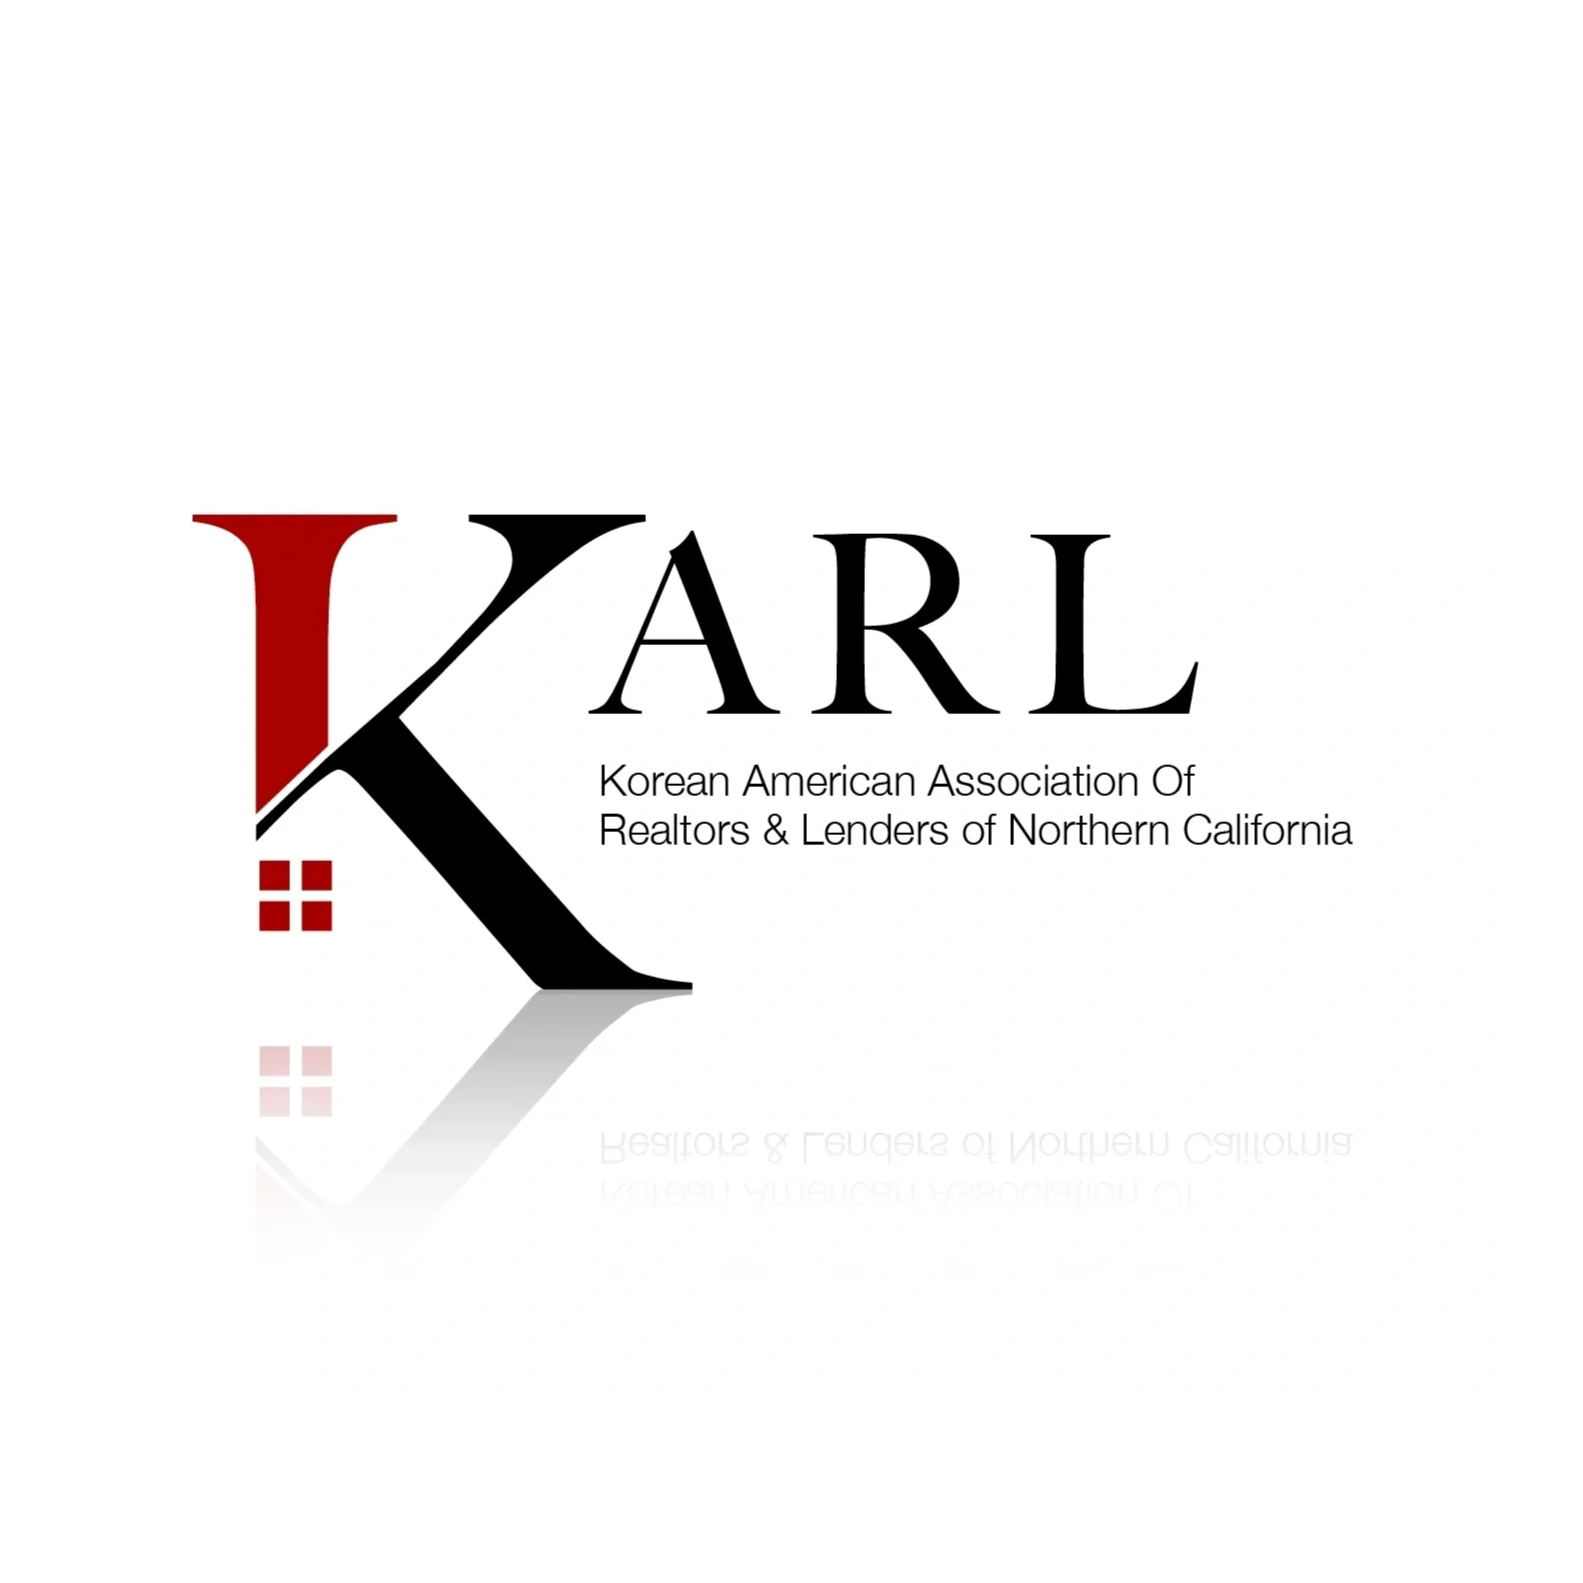 Korean Organization in USA - Korean American Association of Realtors and Lenders of Northern California